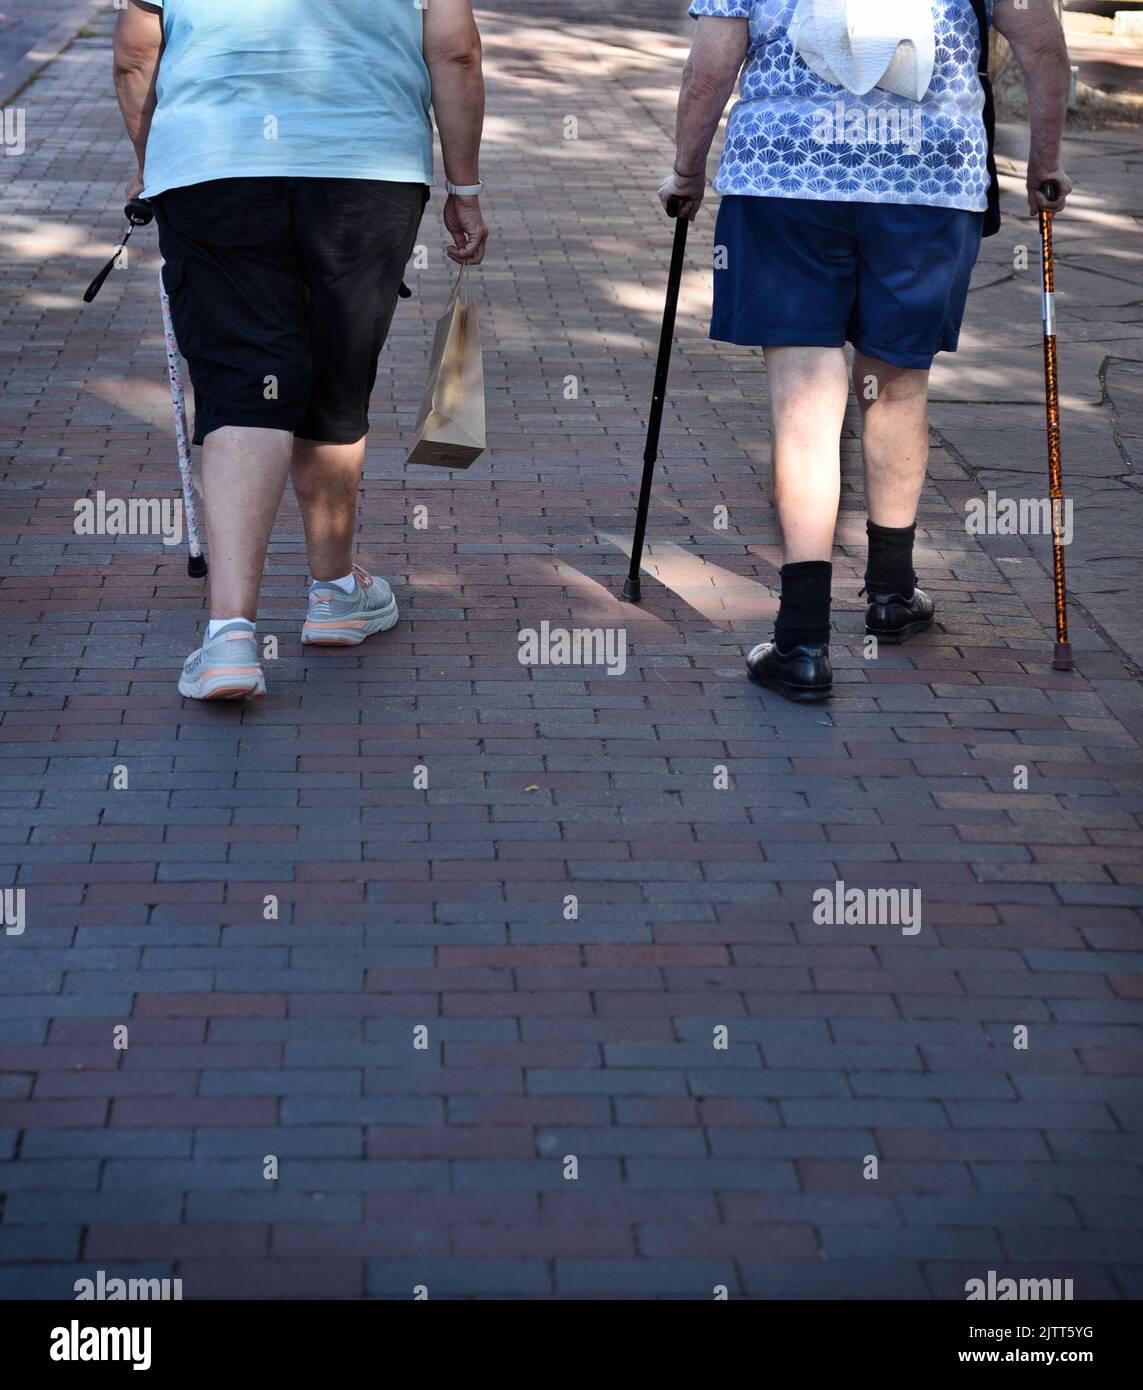 Two elderly women with walking canes walk along a sidewalk in Santa Fe, New Mexico. Stock Photo